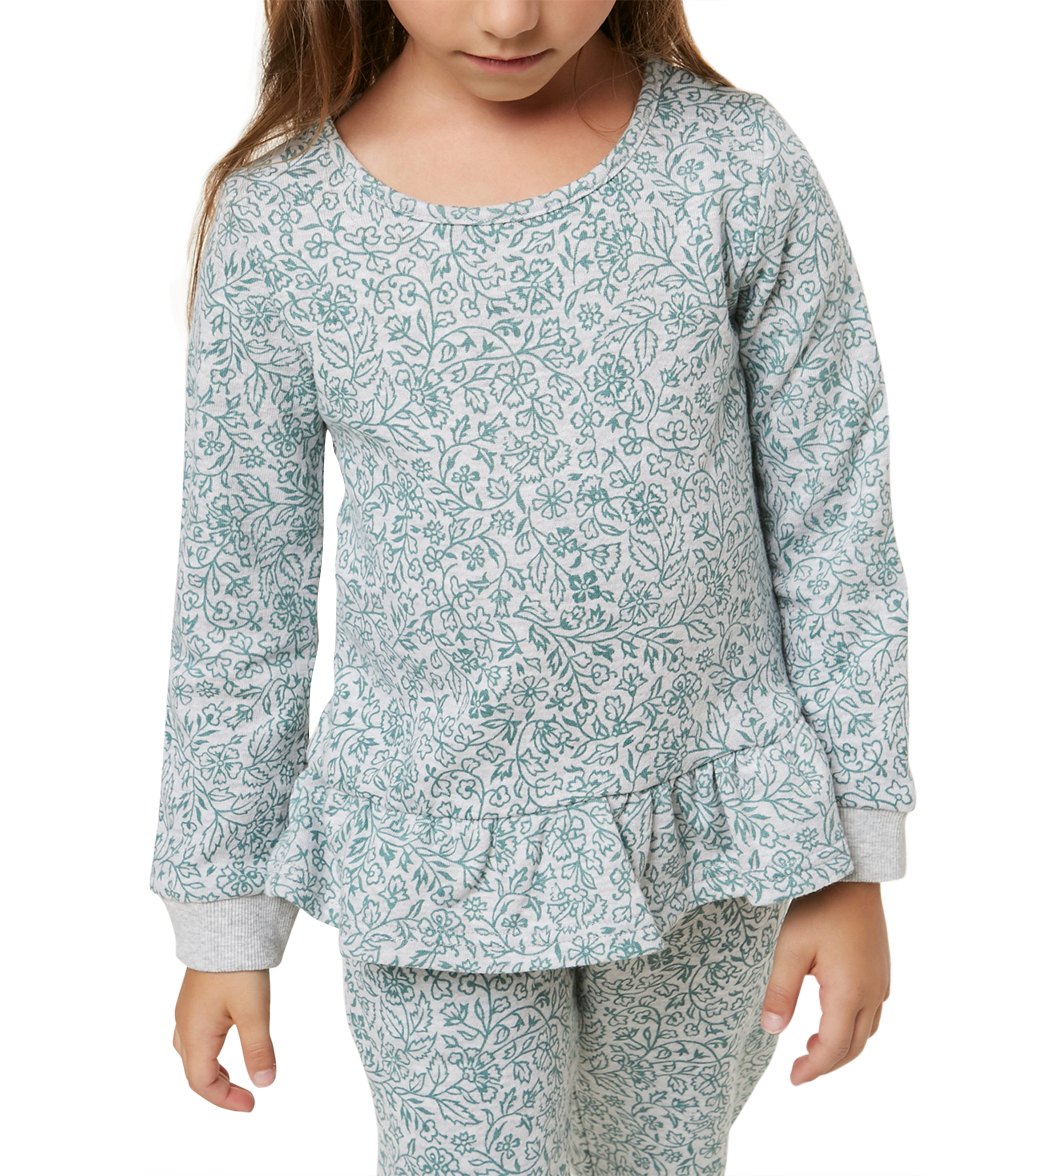 O'neill Girls' Loveland Pullover Fleece Top Toddler - Heather Grey 2T Cotton/Polyester - Swimoutlet.com